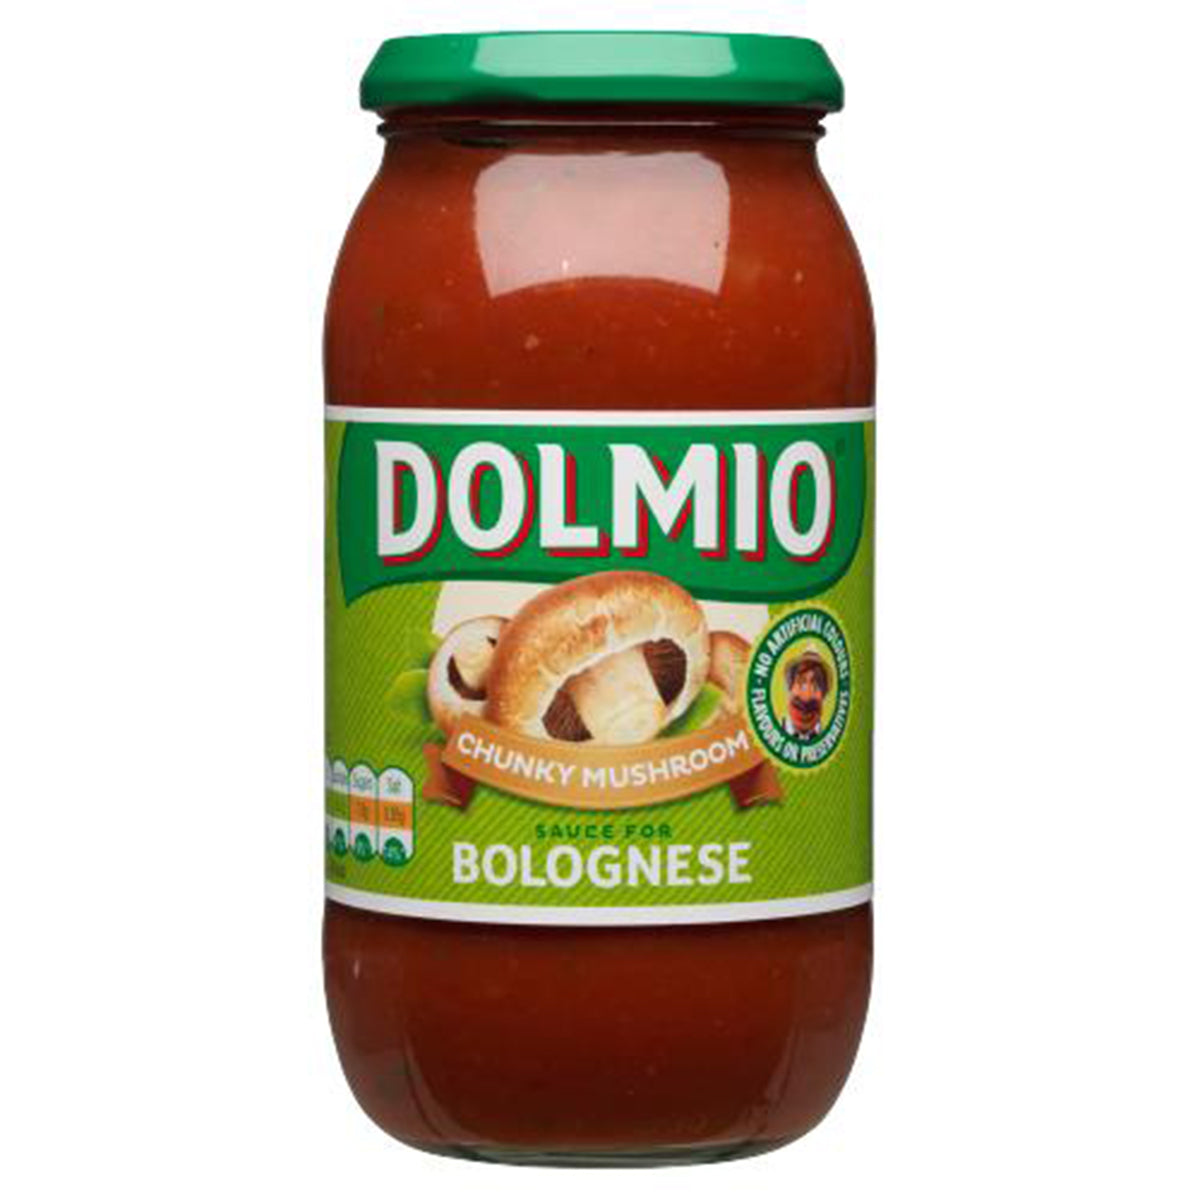 A jar of Dolmio Bolognese Chunky Mushroom Pasta Sauce - 500g on a white background.